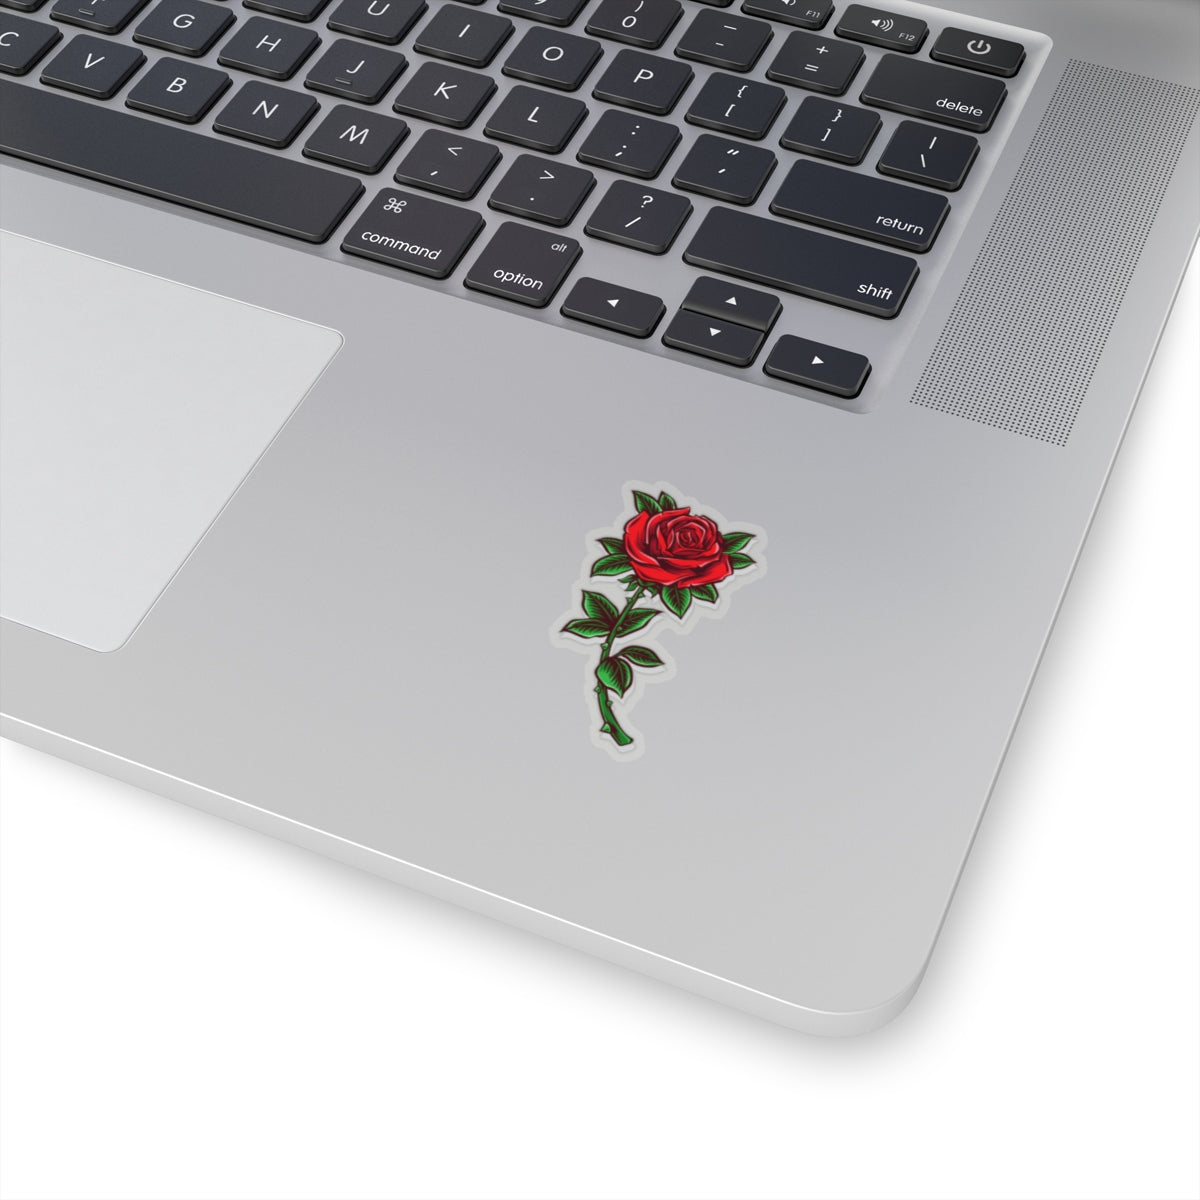 Red Rose Flower Sticker, Floral Art Tattoo Laptop Vinyl Cute Waterproof Waterbottle Tumbler Car Bumper Aesthetic Label Phone Mural Decal Starcove Fashion